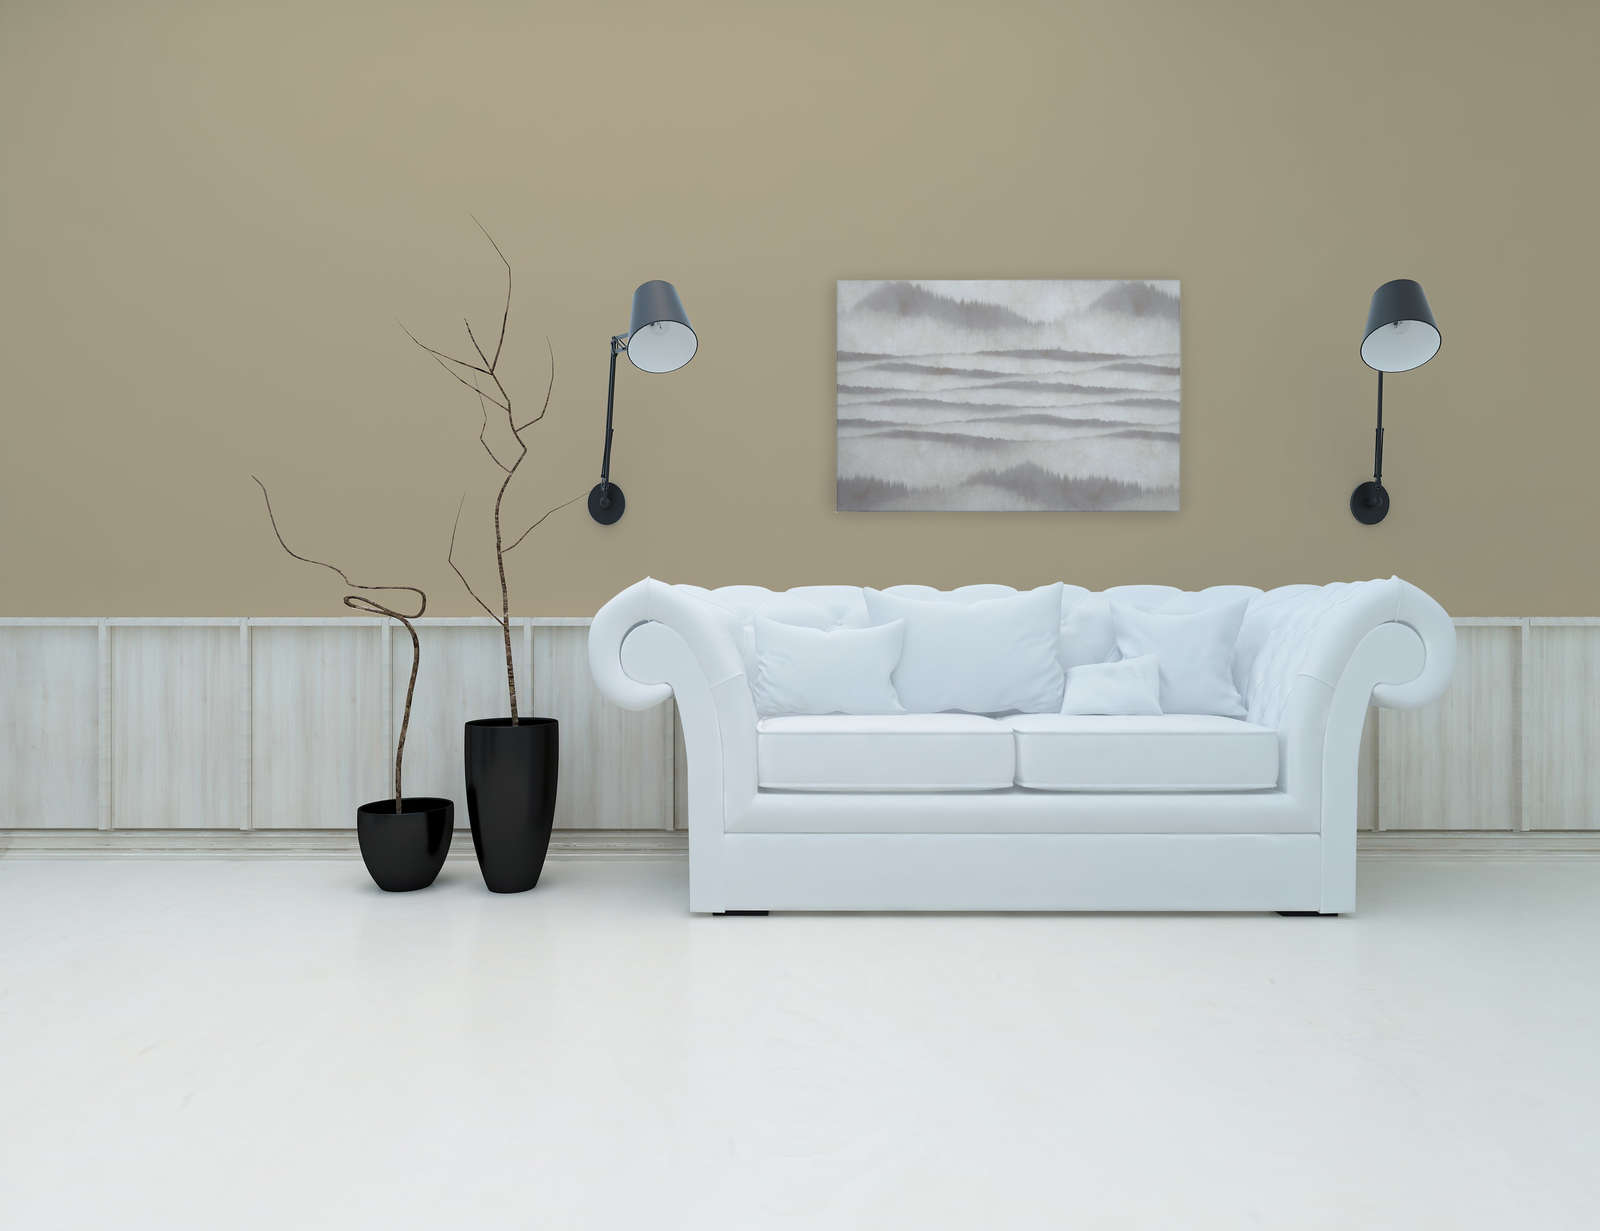             Canvas schilderij abstract patroon golven | wit, grijs - 0,90 m x 0,60 m
        